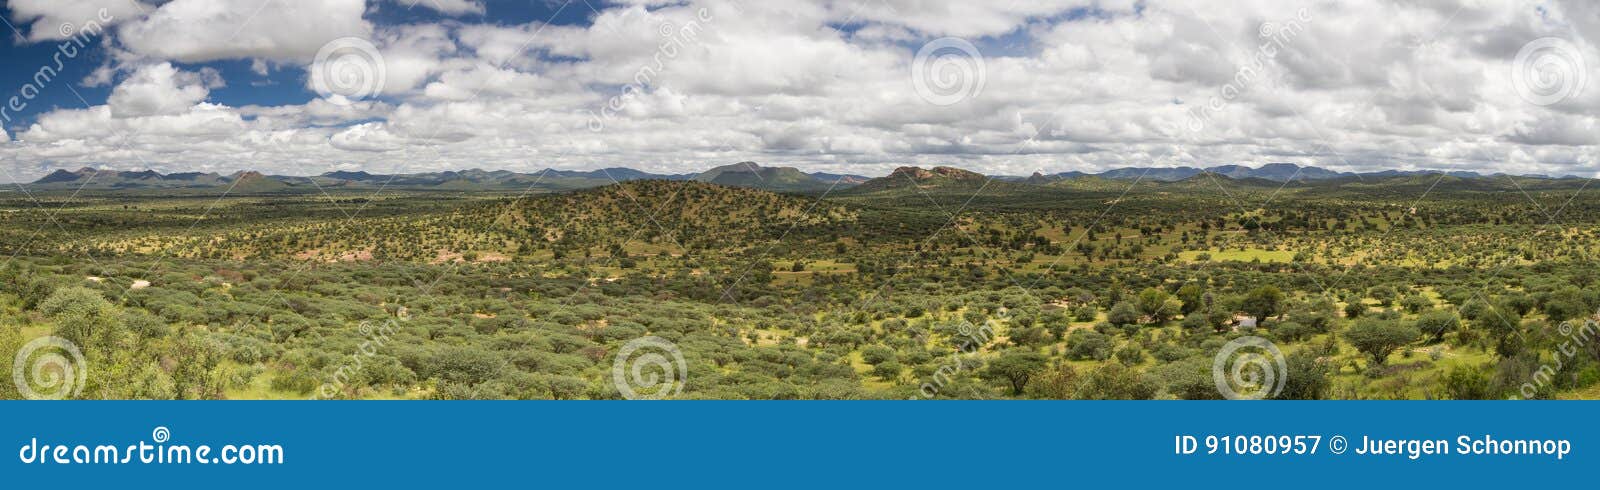 panorama of the namibian grassland in the rain season